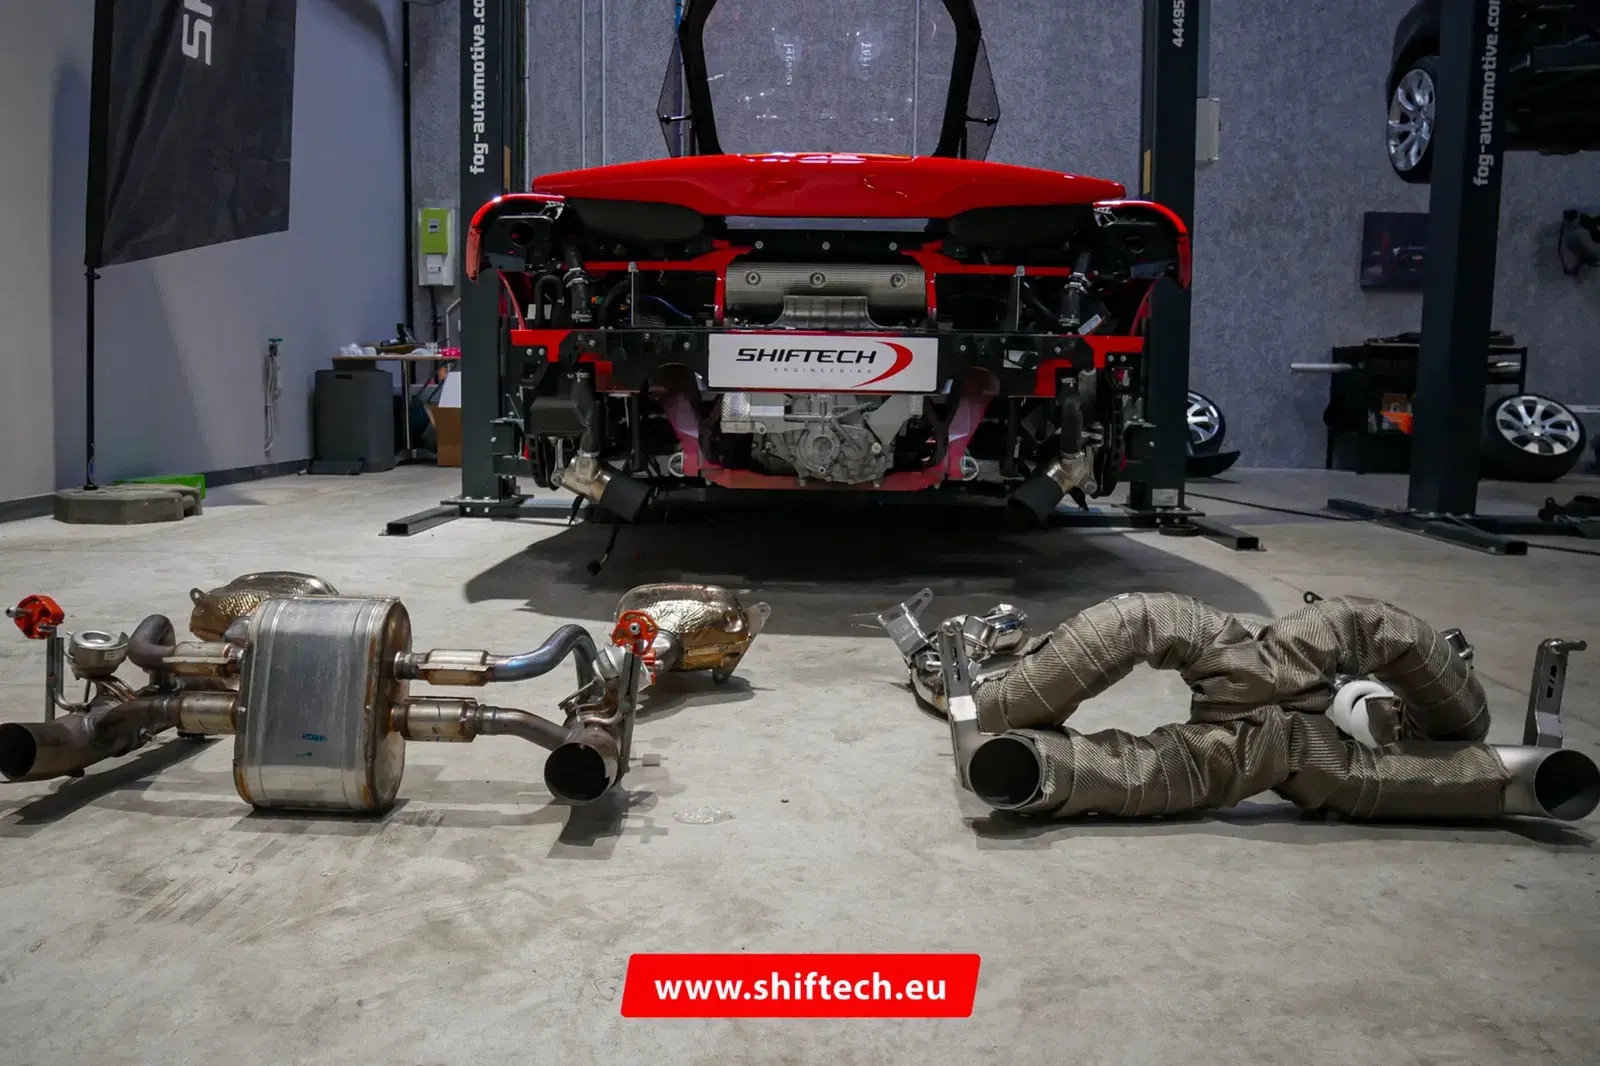 Ferrari 488 gtb pista reporgrammation moteur echappement ipe 15 1697620123